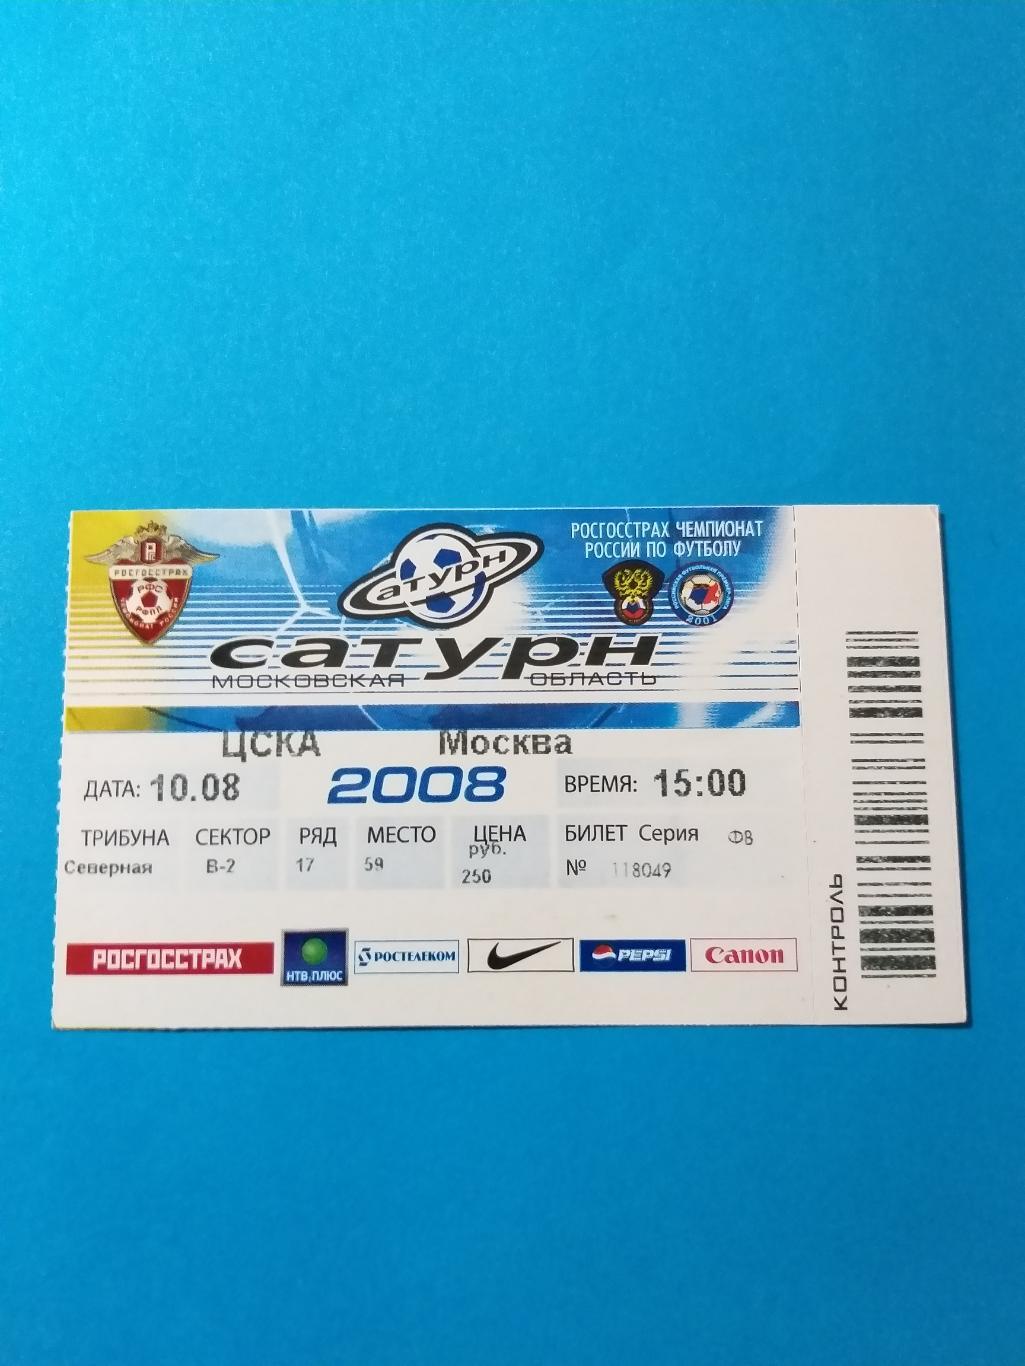 Сатурн(Раменское)-ЦСКА 2008 билет